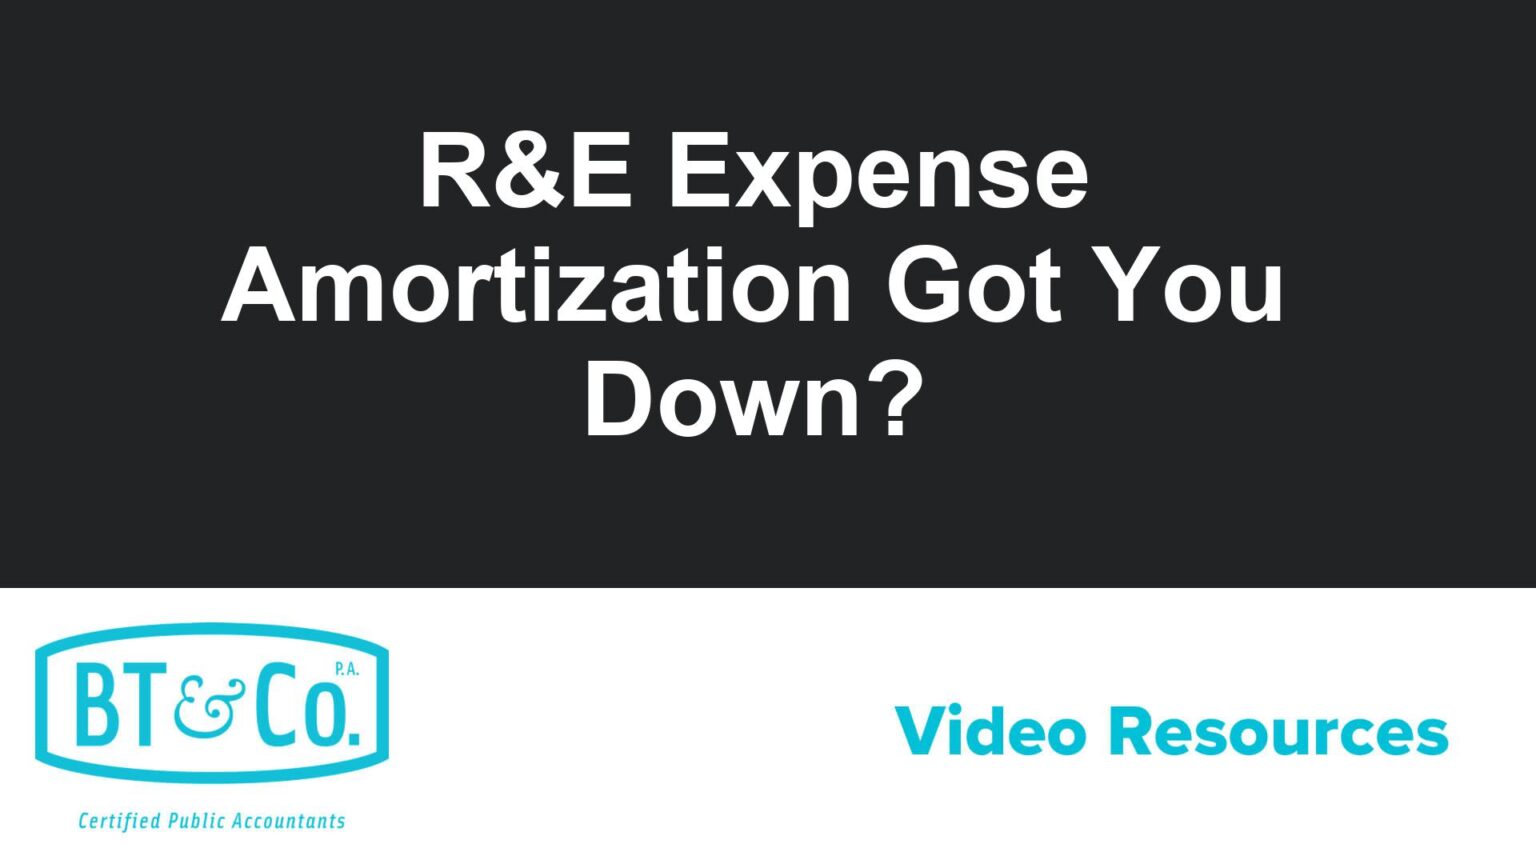 R&E Expense Amortization Got You Down?